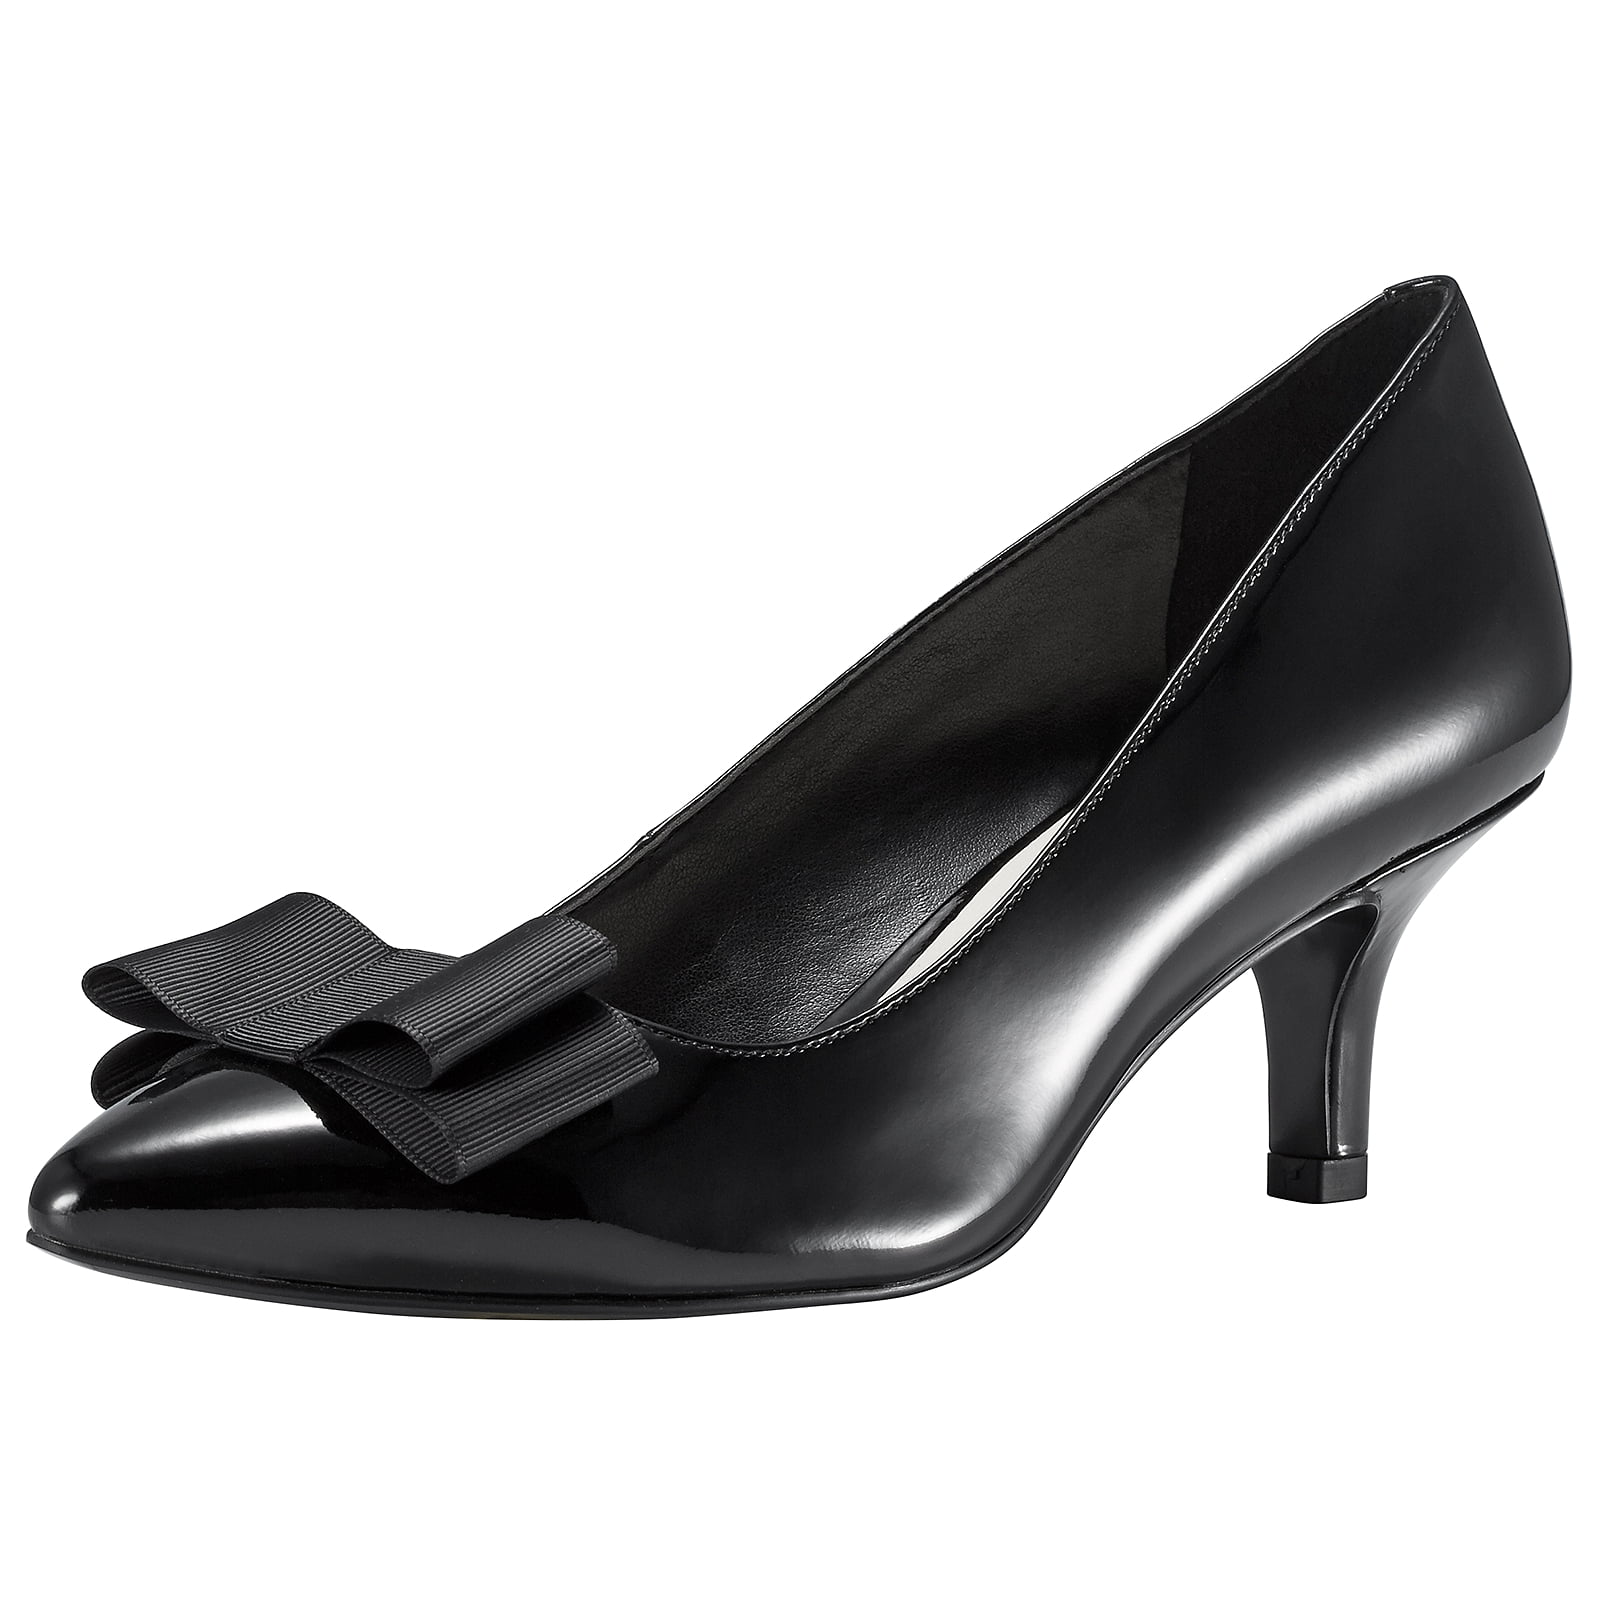 JENN ARDOR Women's Mid Heel Round Peep Toe Pumps Dress Wedding/Party Shoes Black